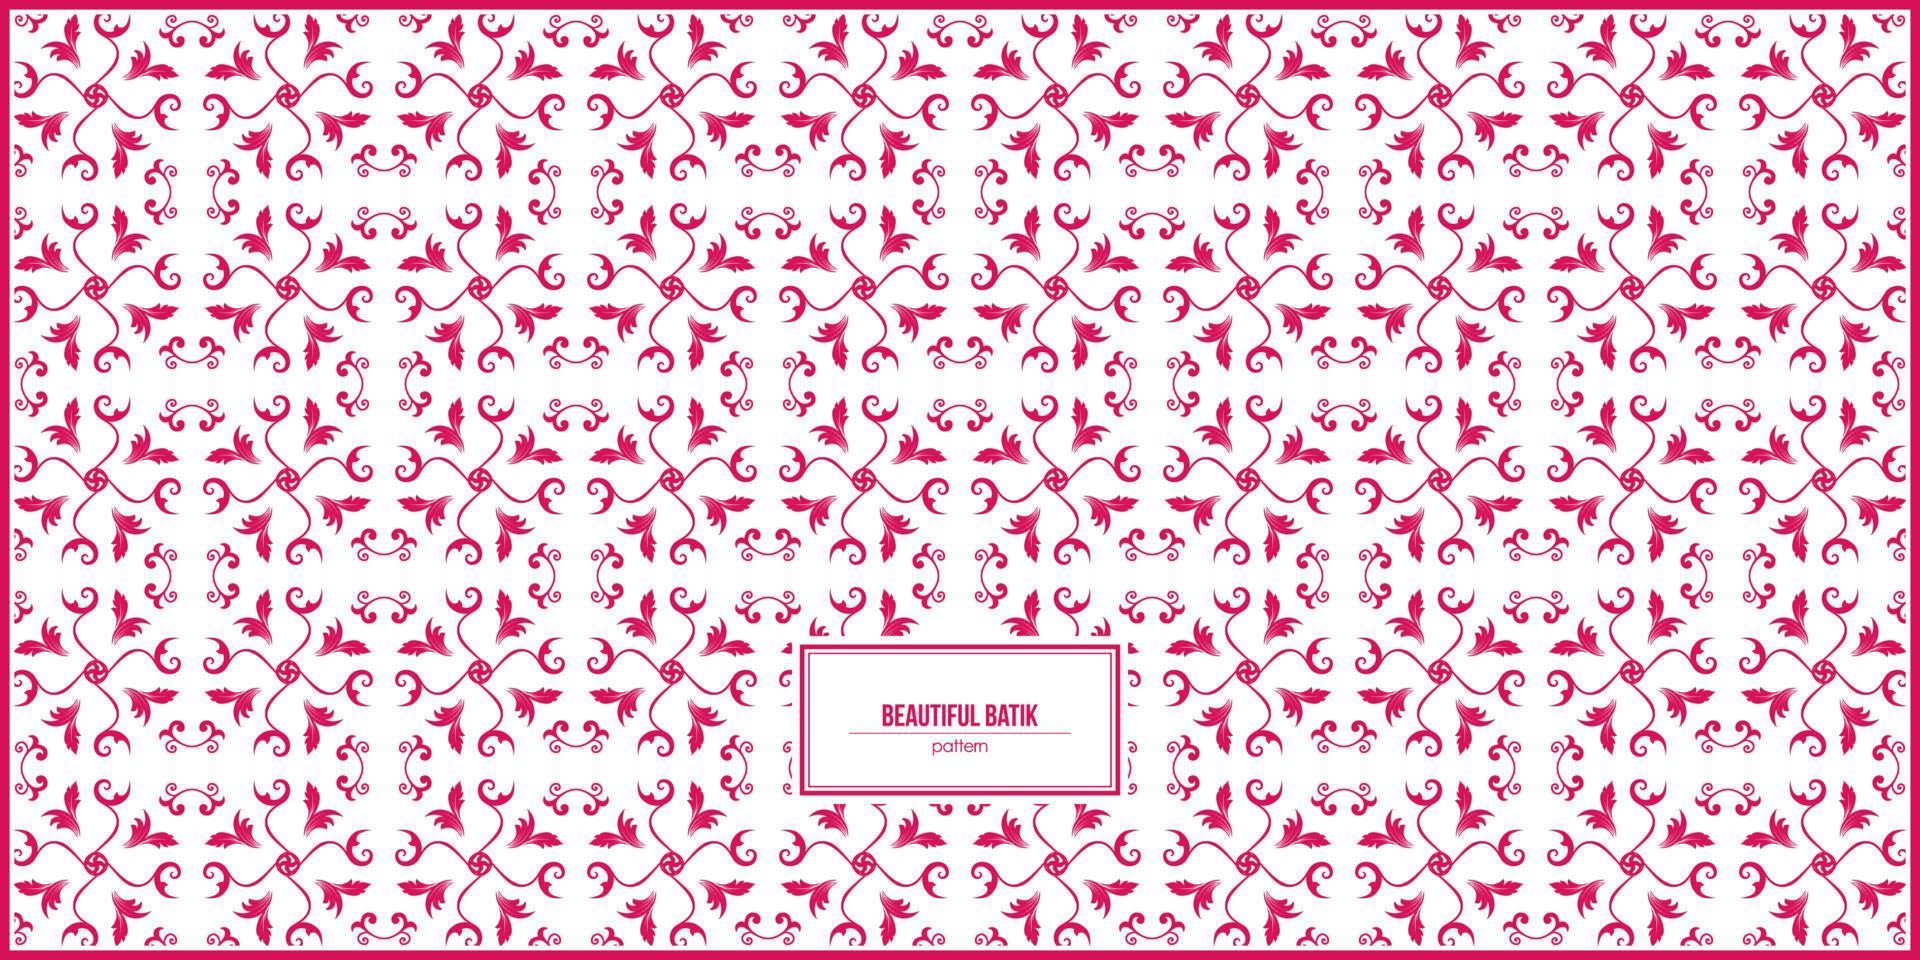 hermoso patrón de batik rosa con múltiples adornos florales vector